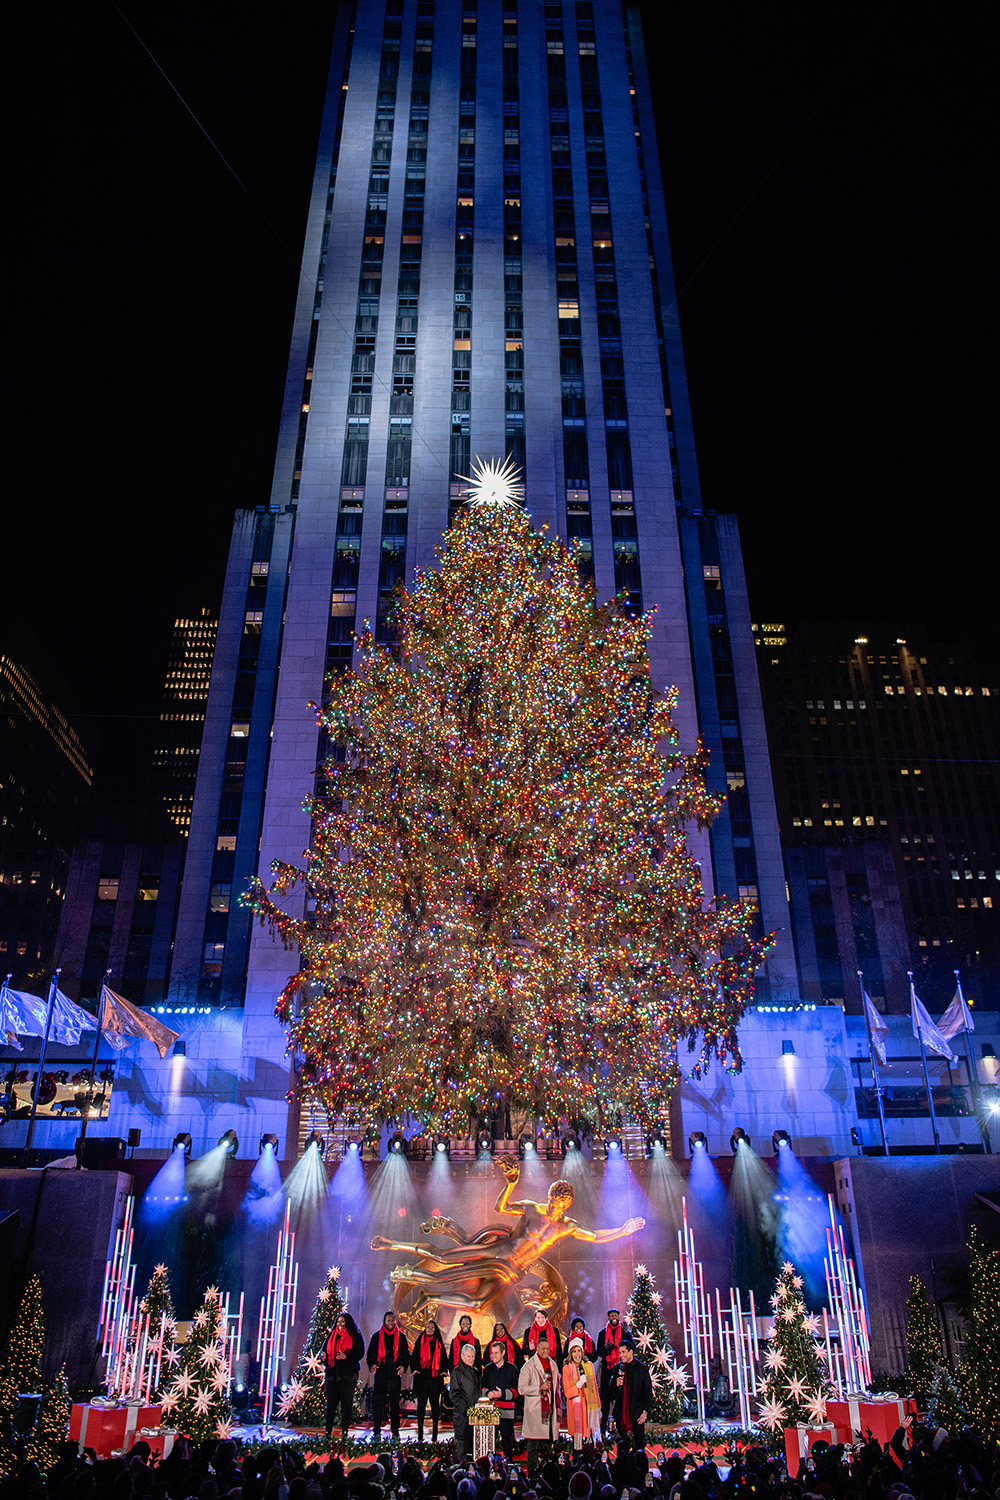 The Swarovski Star Illuminates Rockefeller Center Christmas Tree in New York